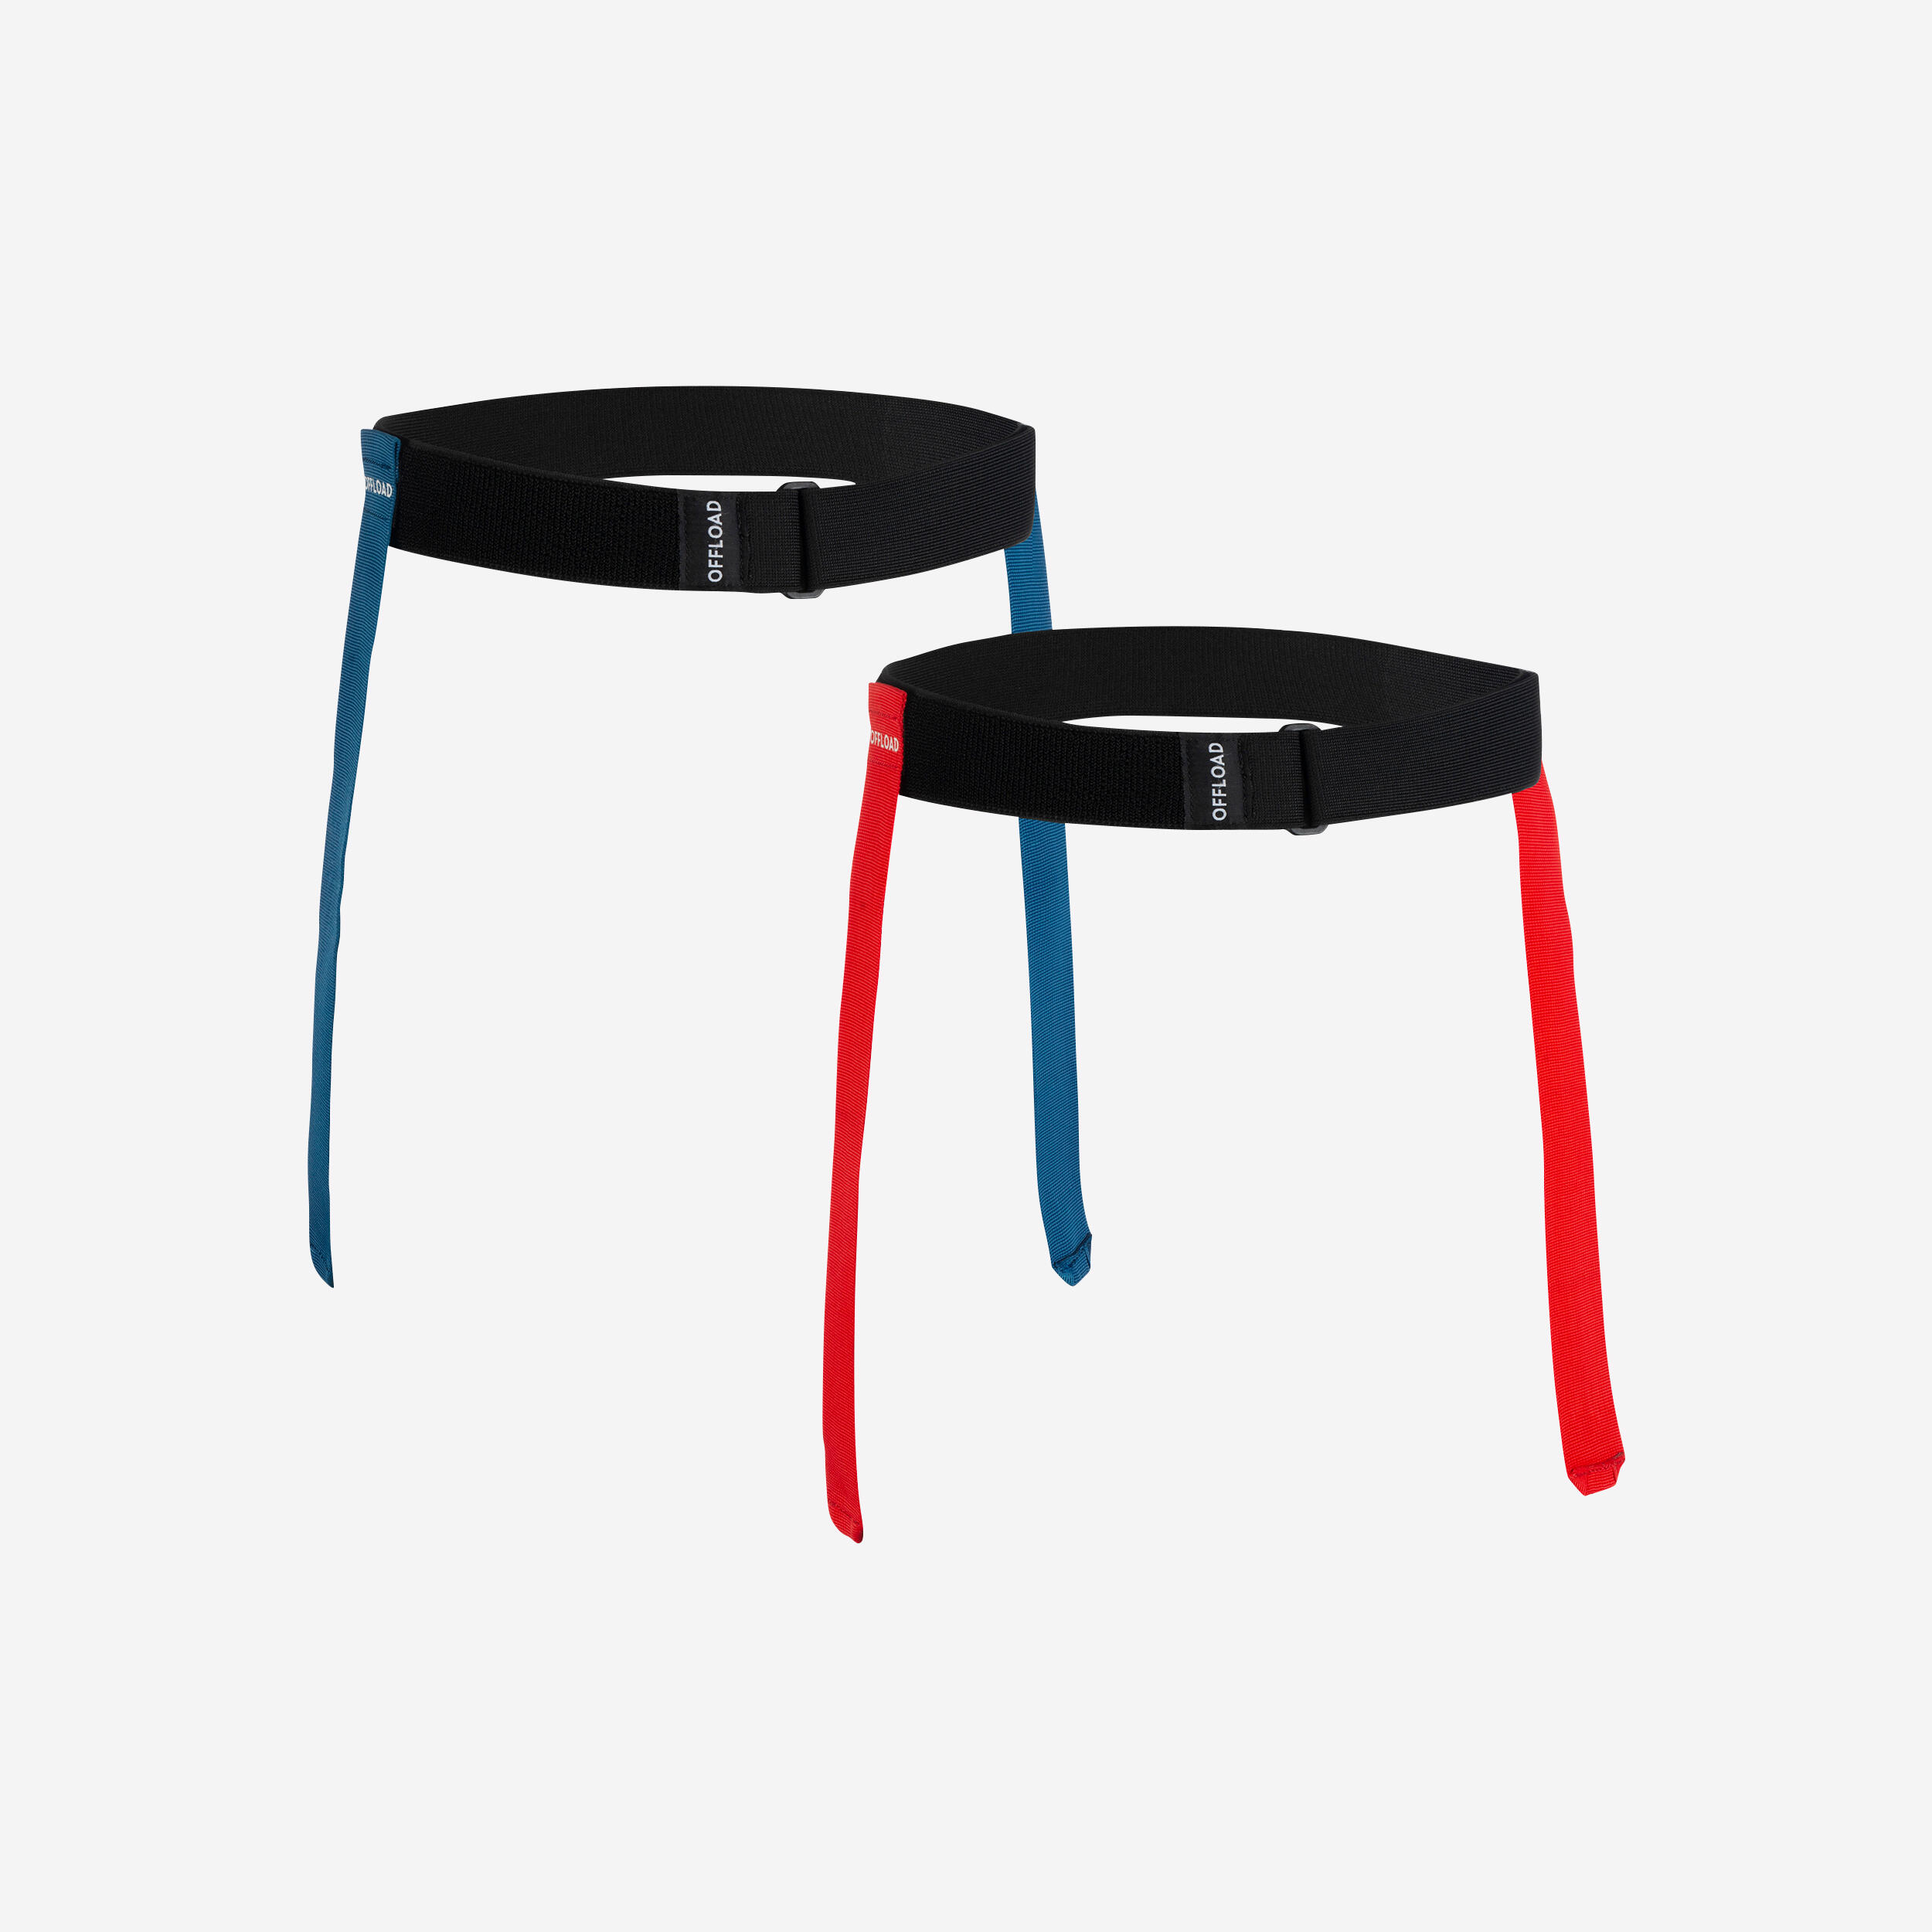 OFFLOAD Tag Rugby Belt Kit R500 - Blue/Red